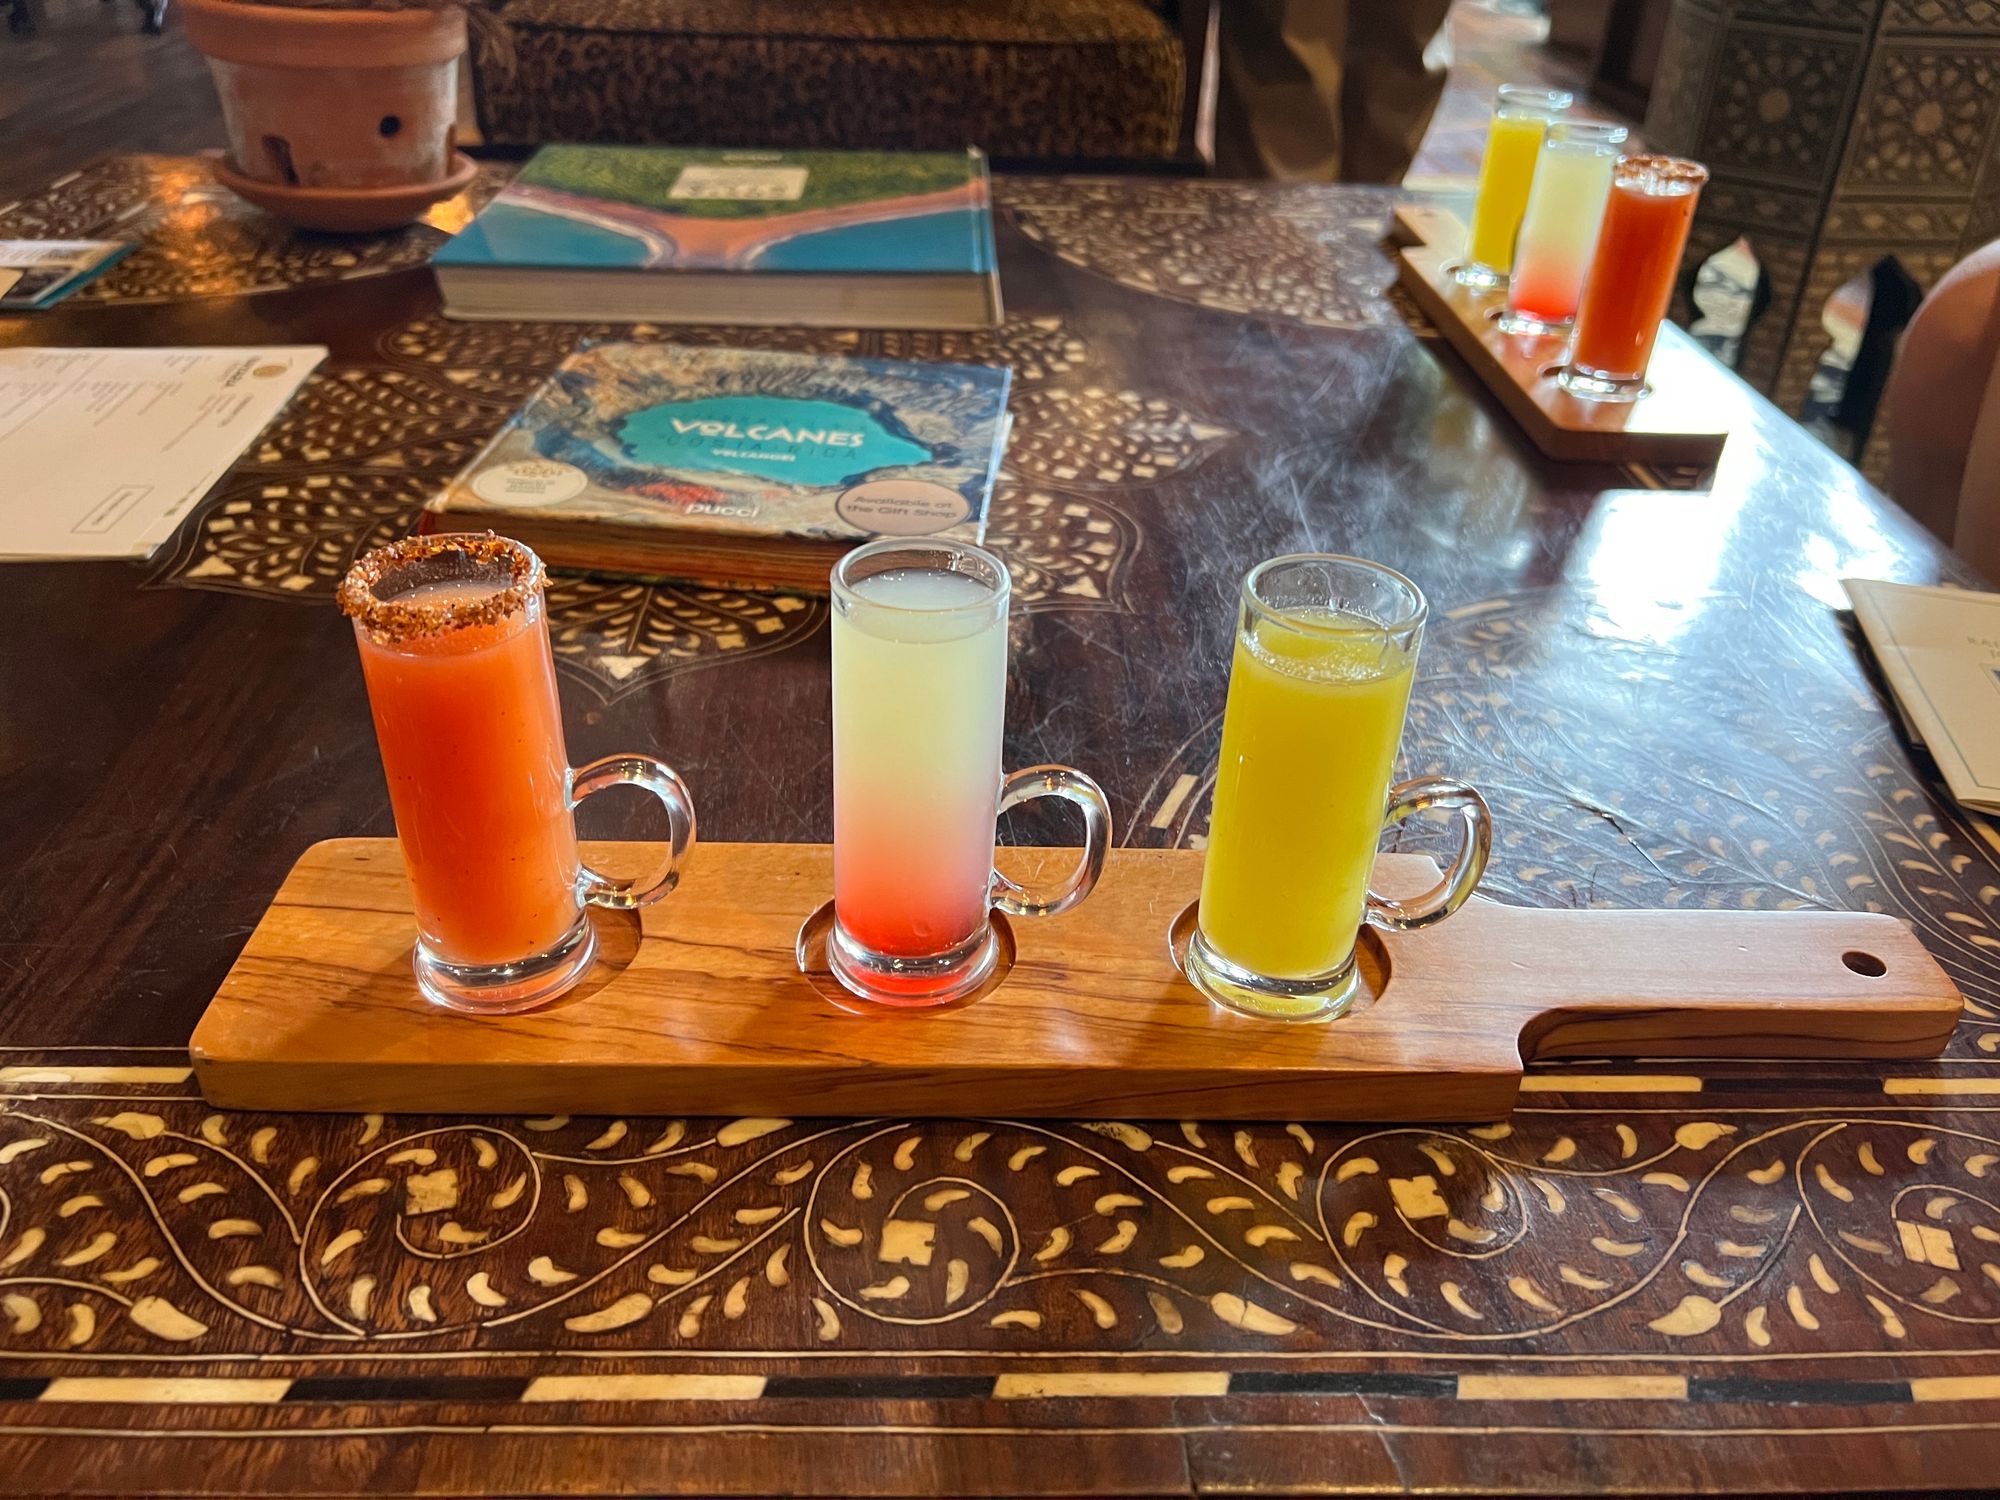 Welcome drinks at Nayara Springs